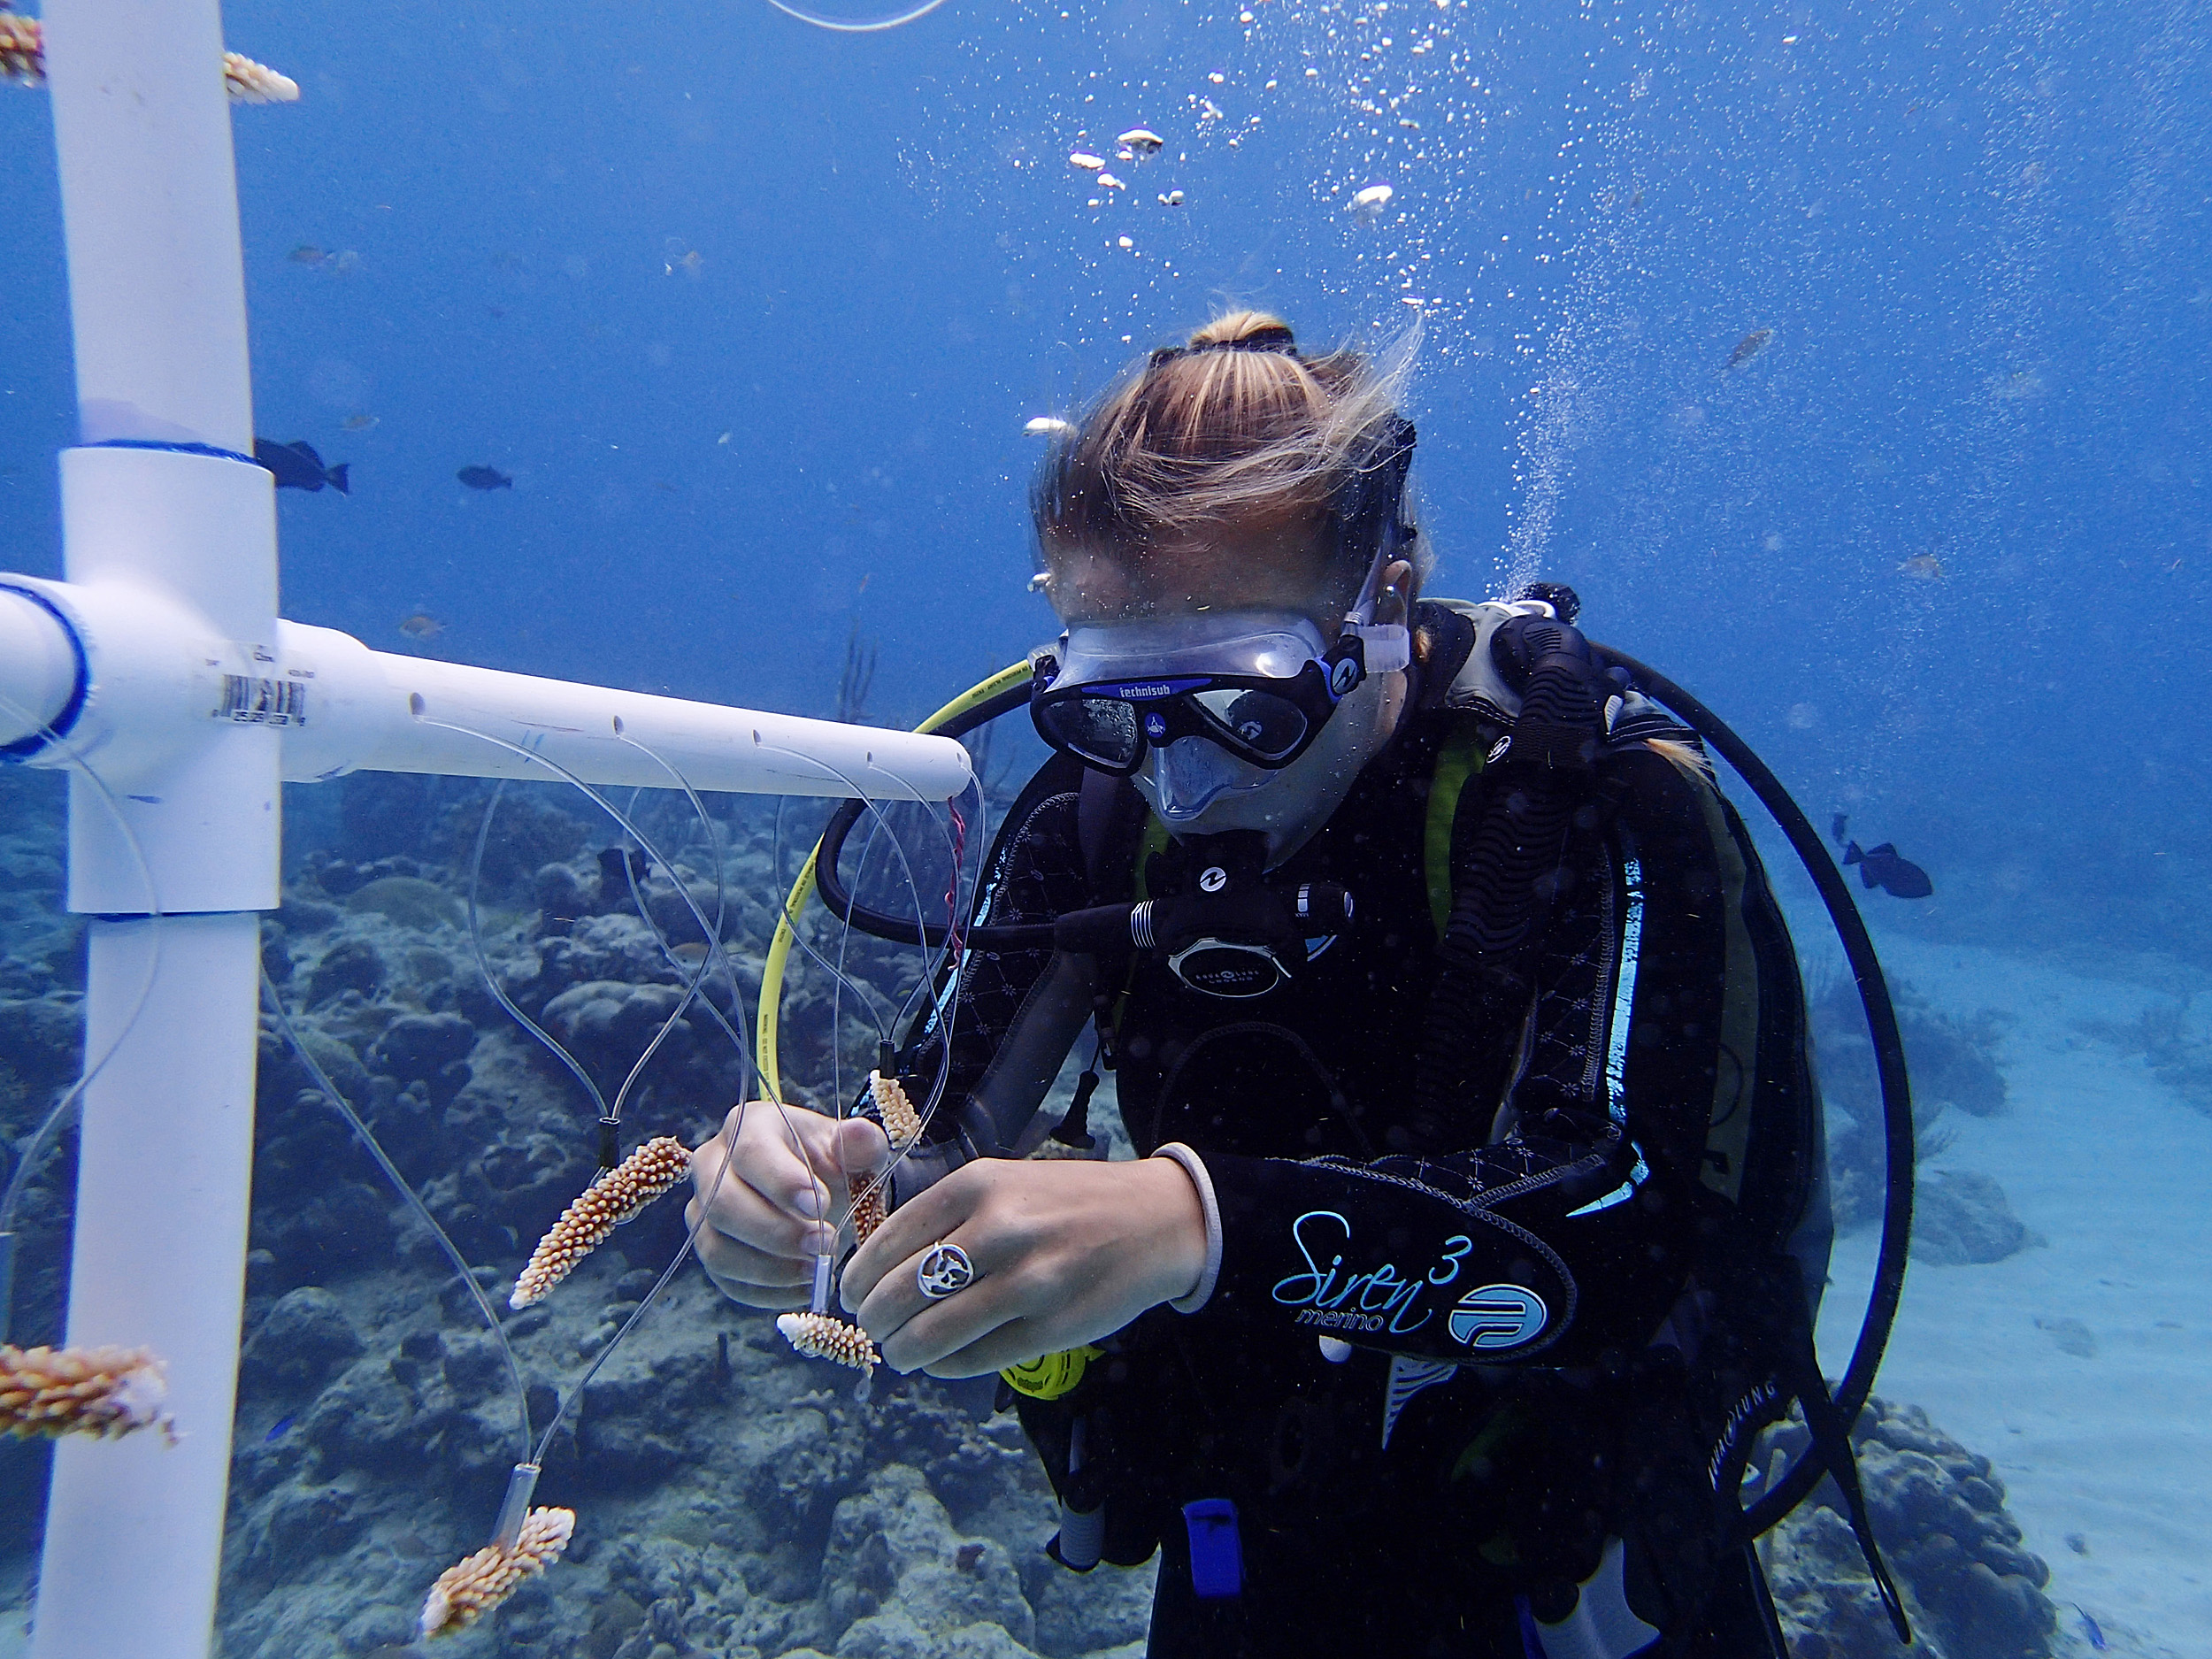 Harvard research explores impact of coral restoration — Harvard Gazette